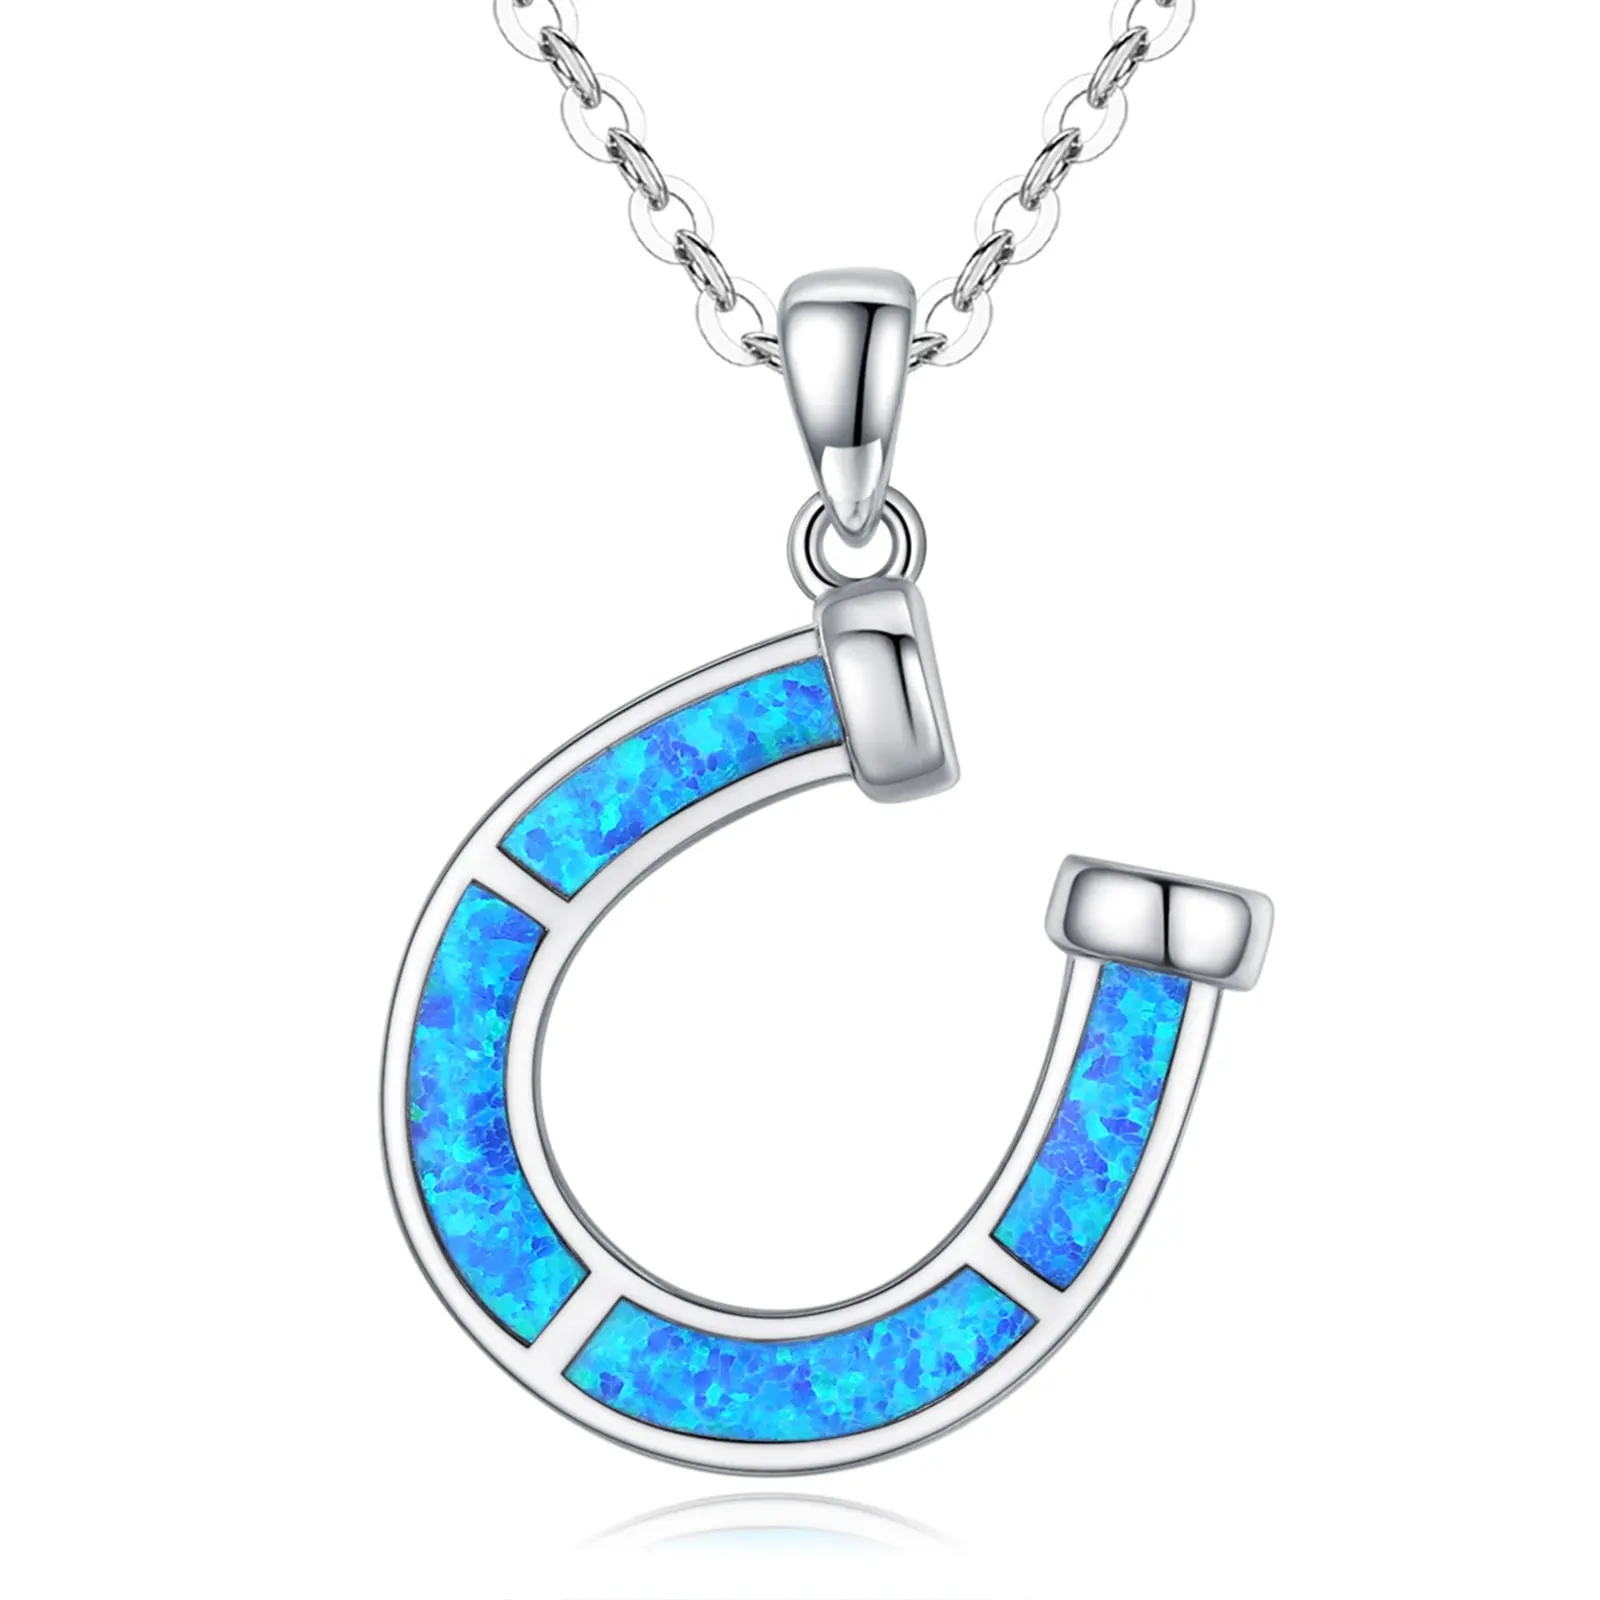 Changda-Colgante de Plata de Ley 925 para mujer, con gema azul, Ópalo, platinum horse shoe, collar